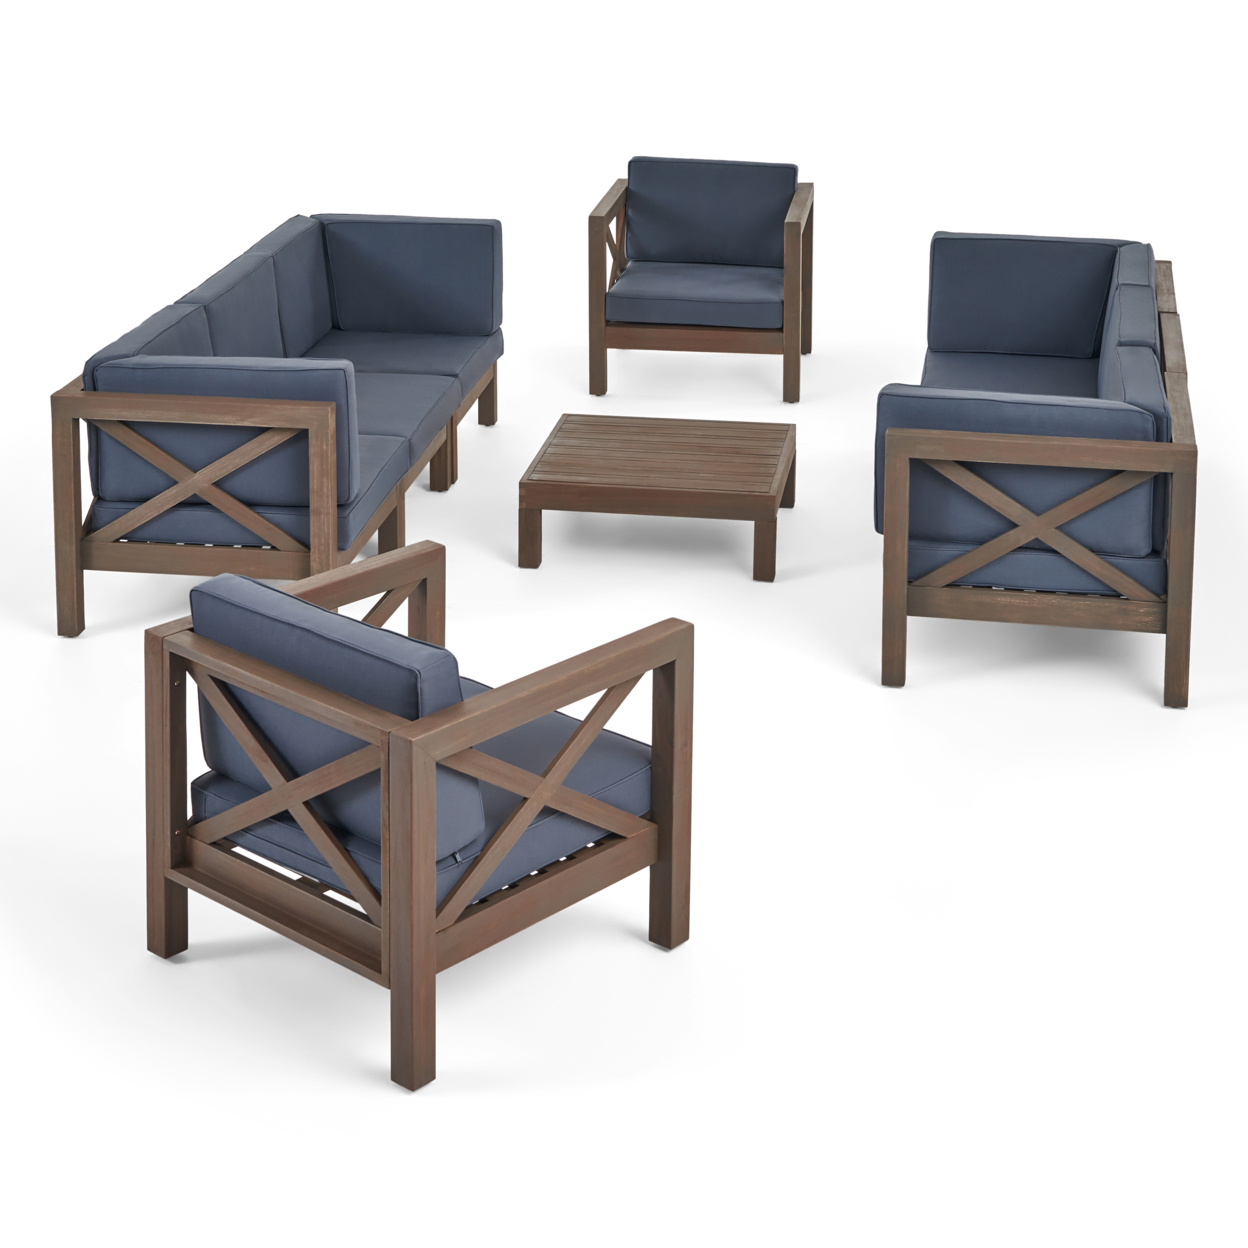 Morgan Outdoor 8 Seater Acacia Wood Sofa And Club Chair Set - Teak Finish + Blue